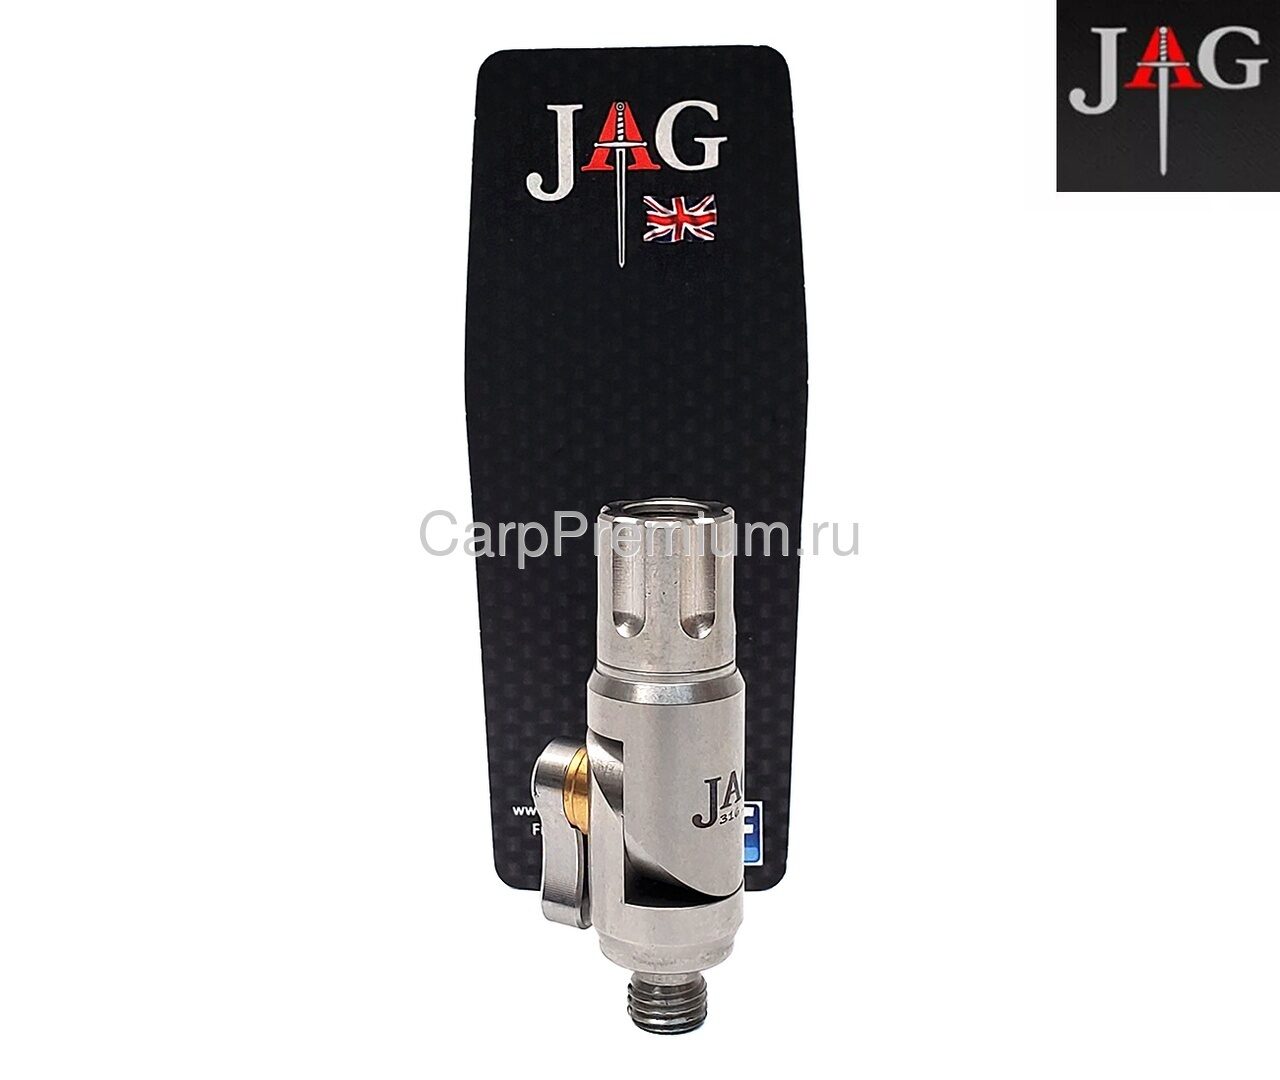 Адаптер для изменения угла наклона Стальной JAG (Джаг) - 316 Stainless High Tipper MK 2